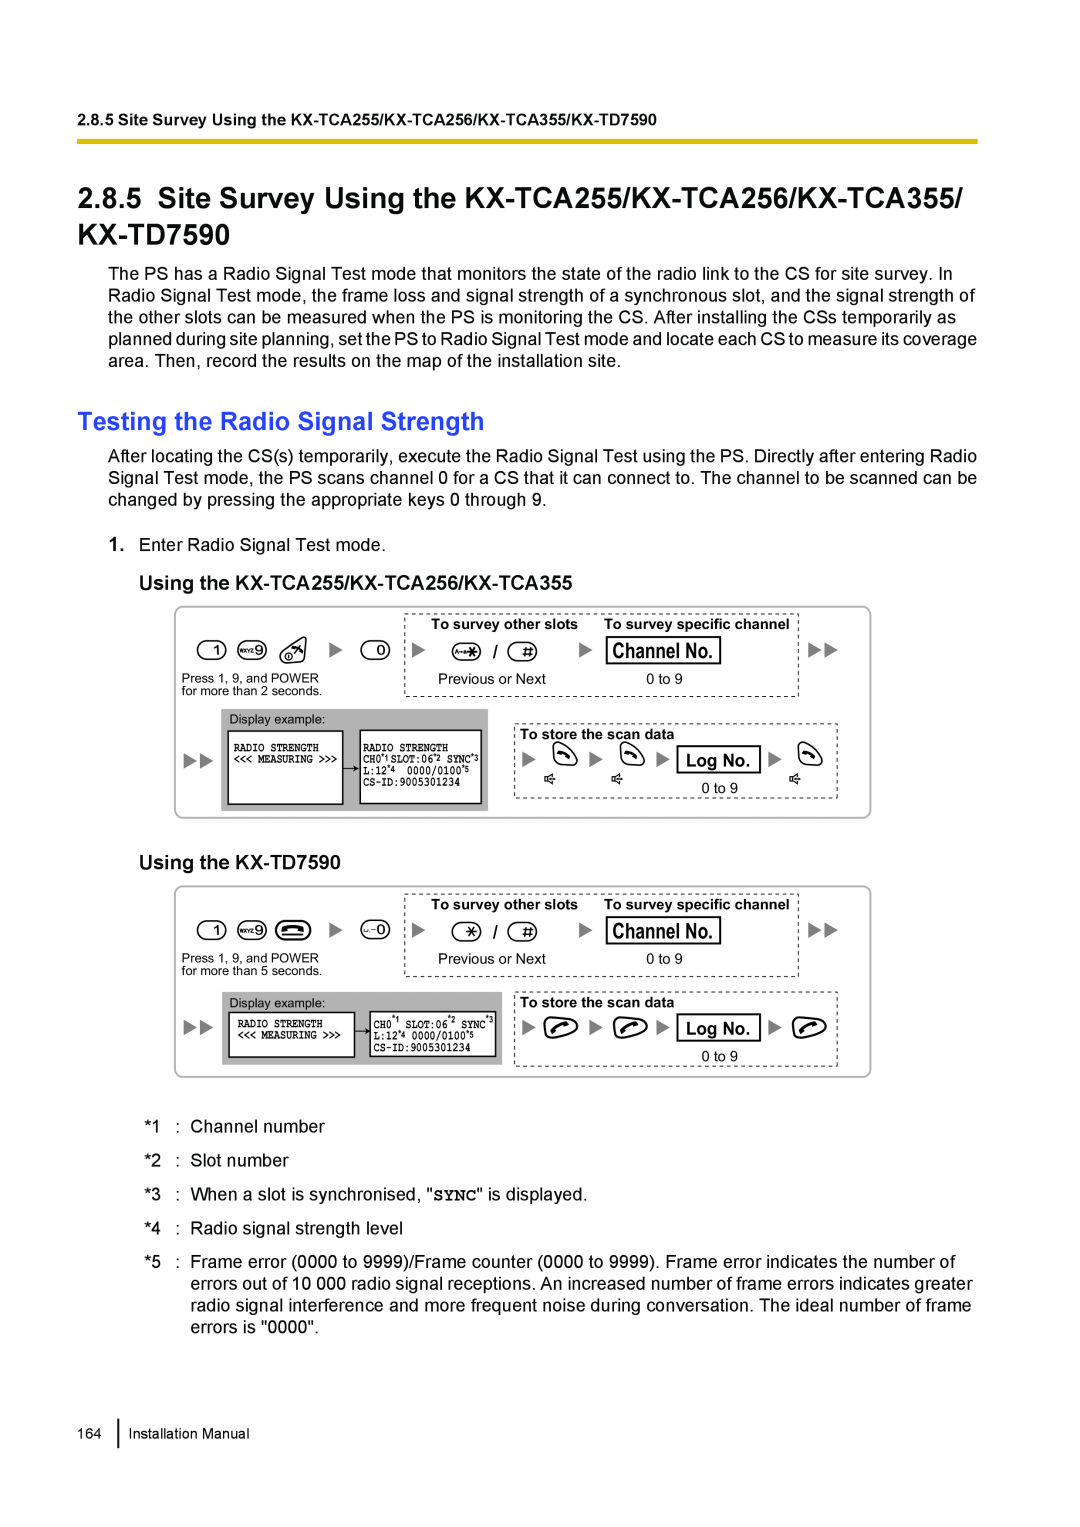 Panasonic KX-TDA100 Site Survey Using the KX-TCA255/KX-TCA256/KX-TCA355/ KX-TD7590, Testing the Radio Signal Strength 